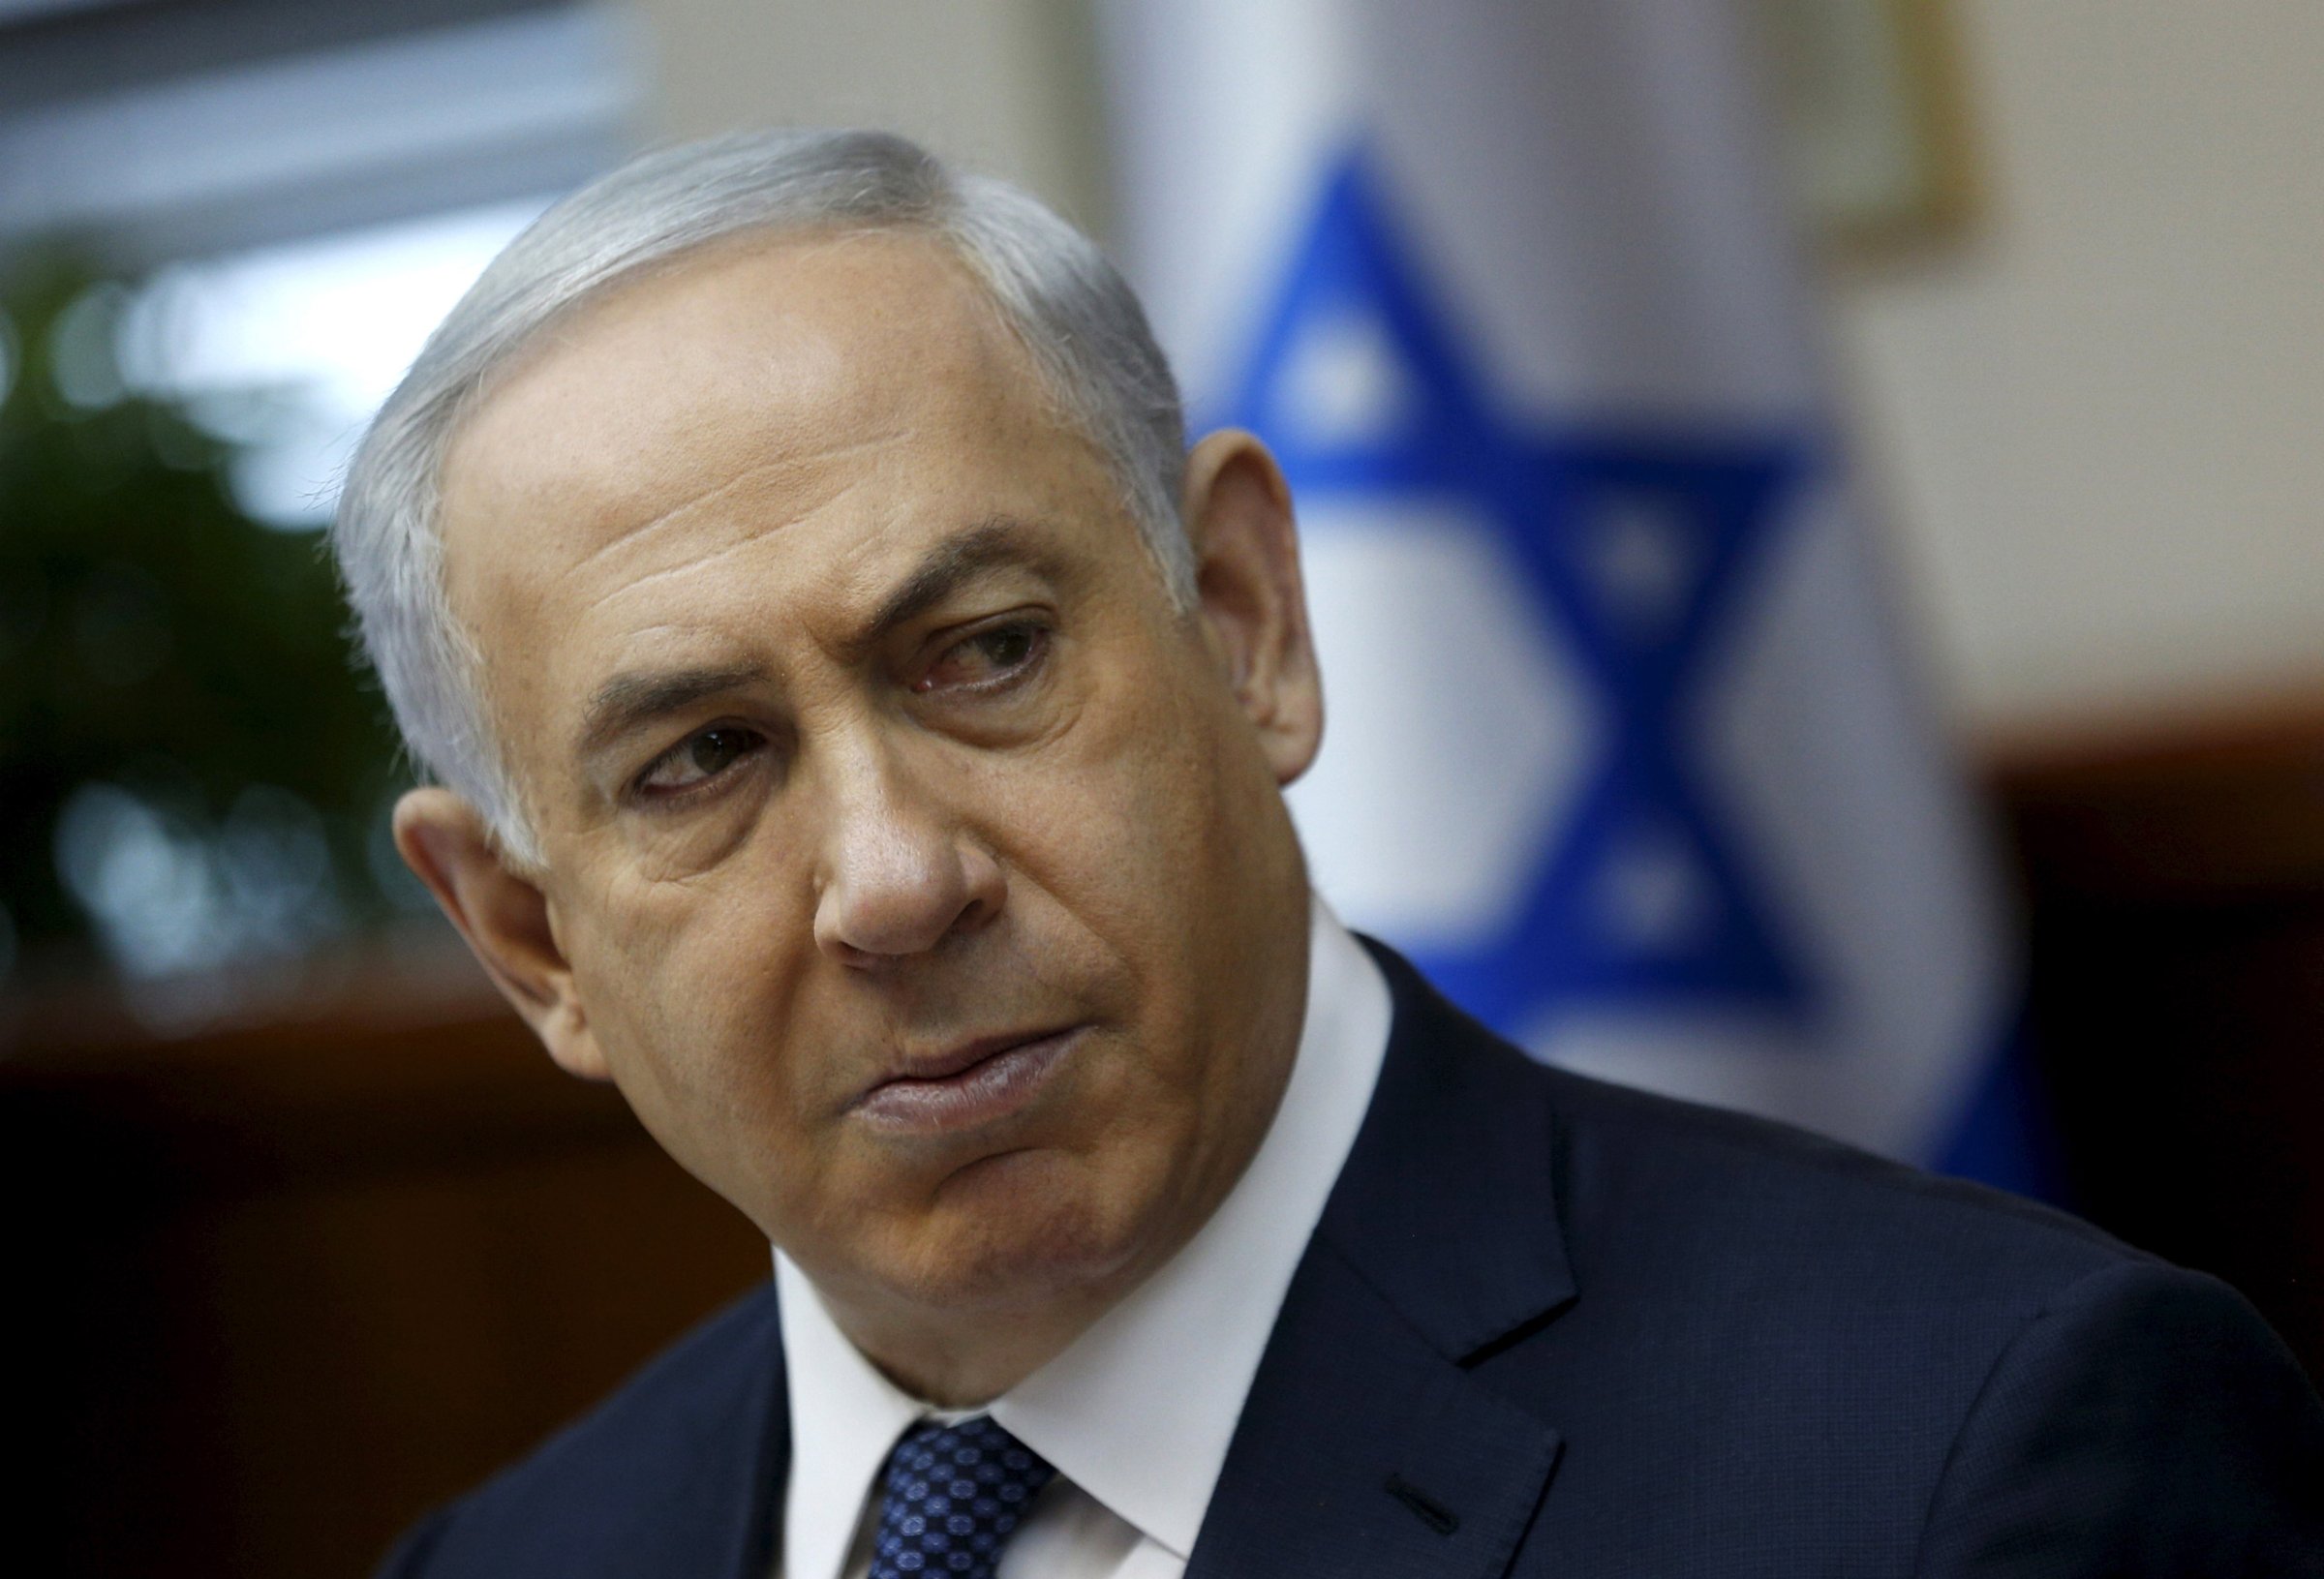 Israeli Prime Minister Benjamin Netanyahu attends the weekly cabinet meeting in Jerusalem January 3, 2016. REUTERS/Amir Cohen - RTX20UOD